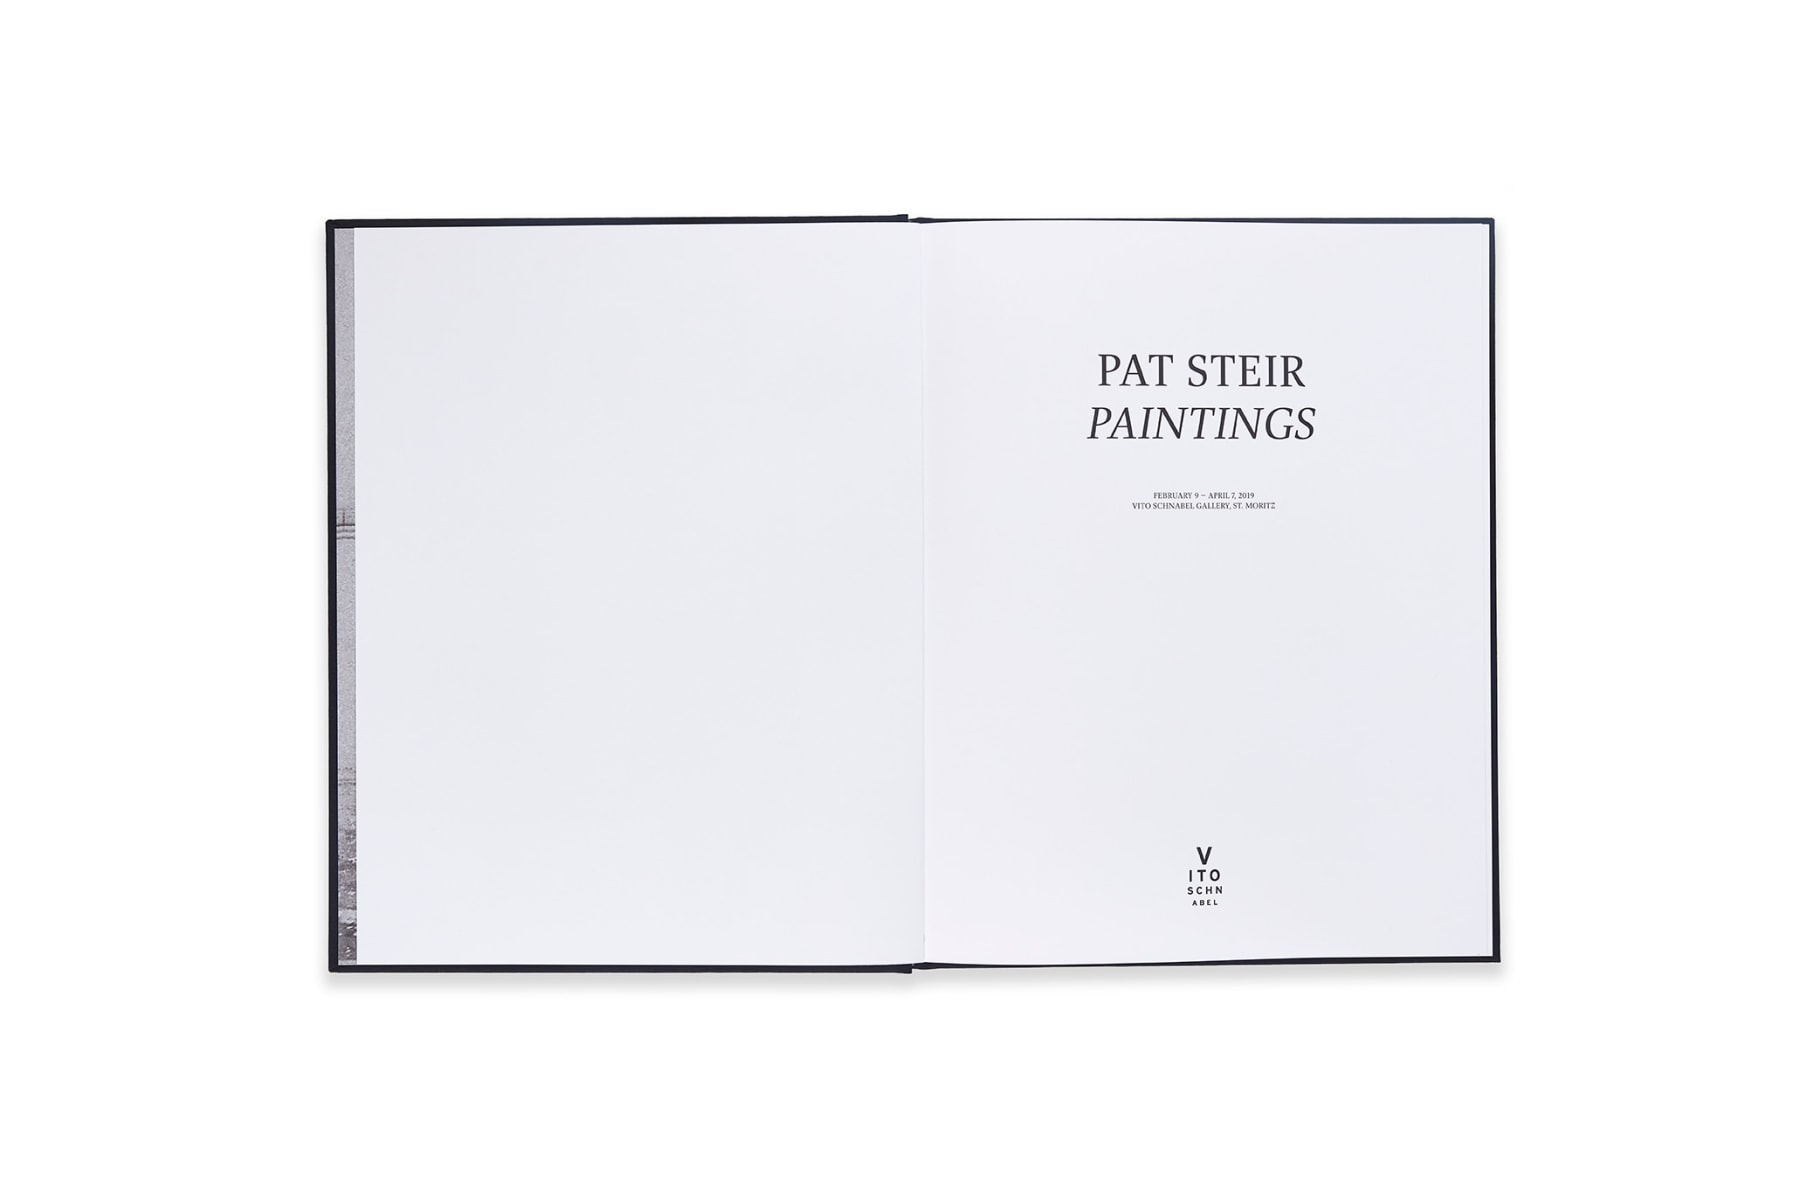 Image of Pat Steir: Paintings Catalogue spread